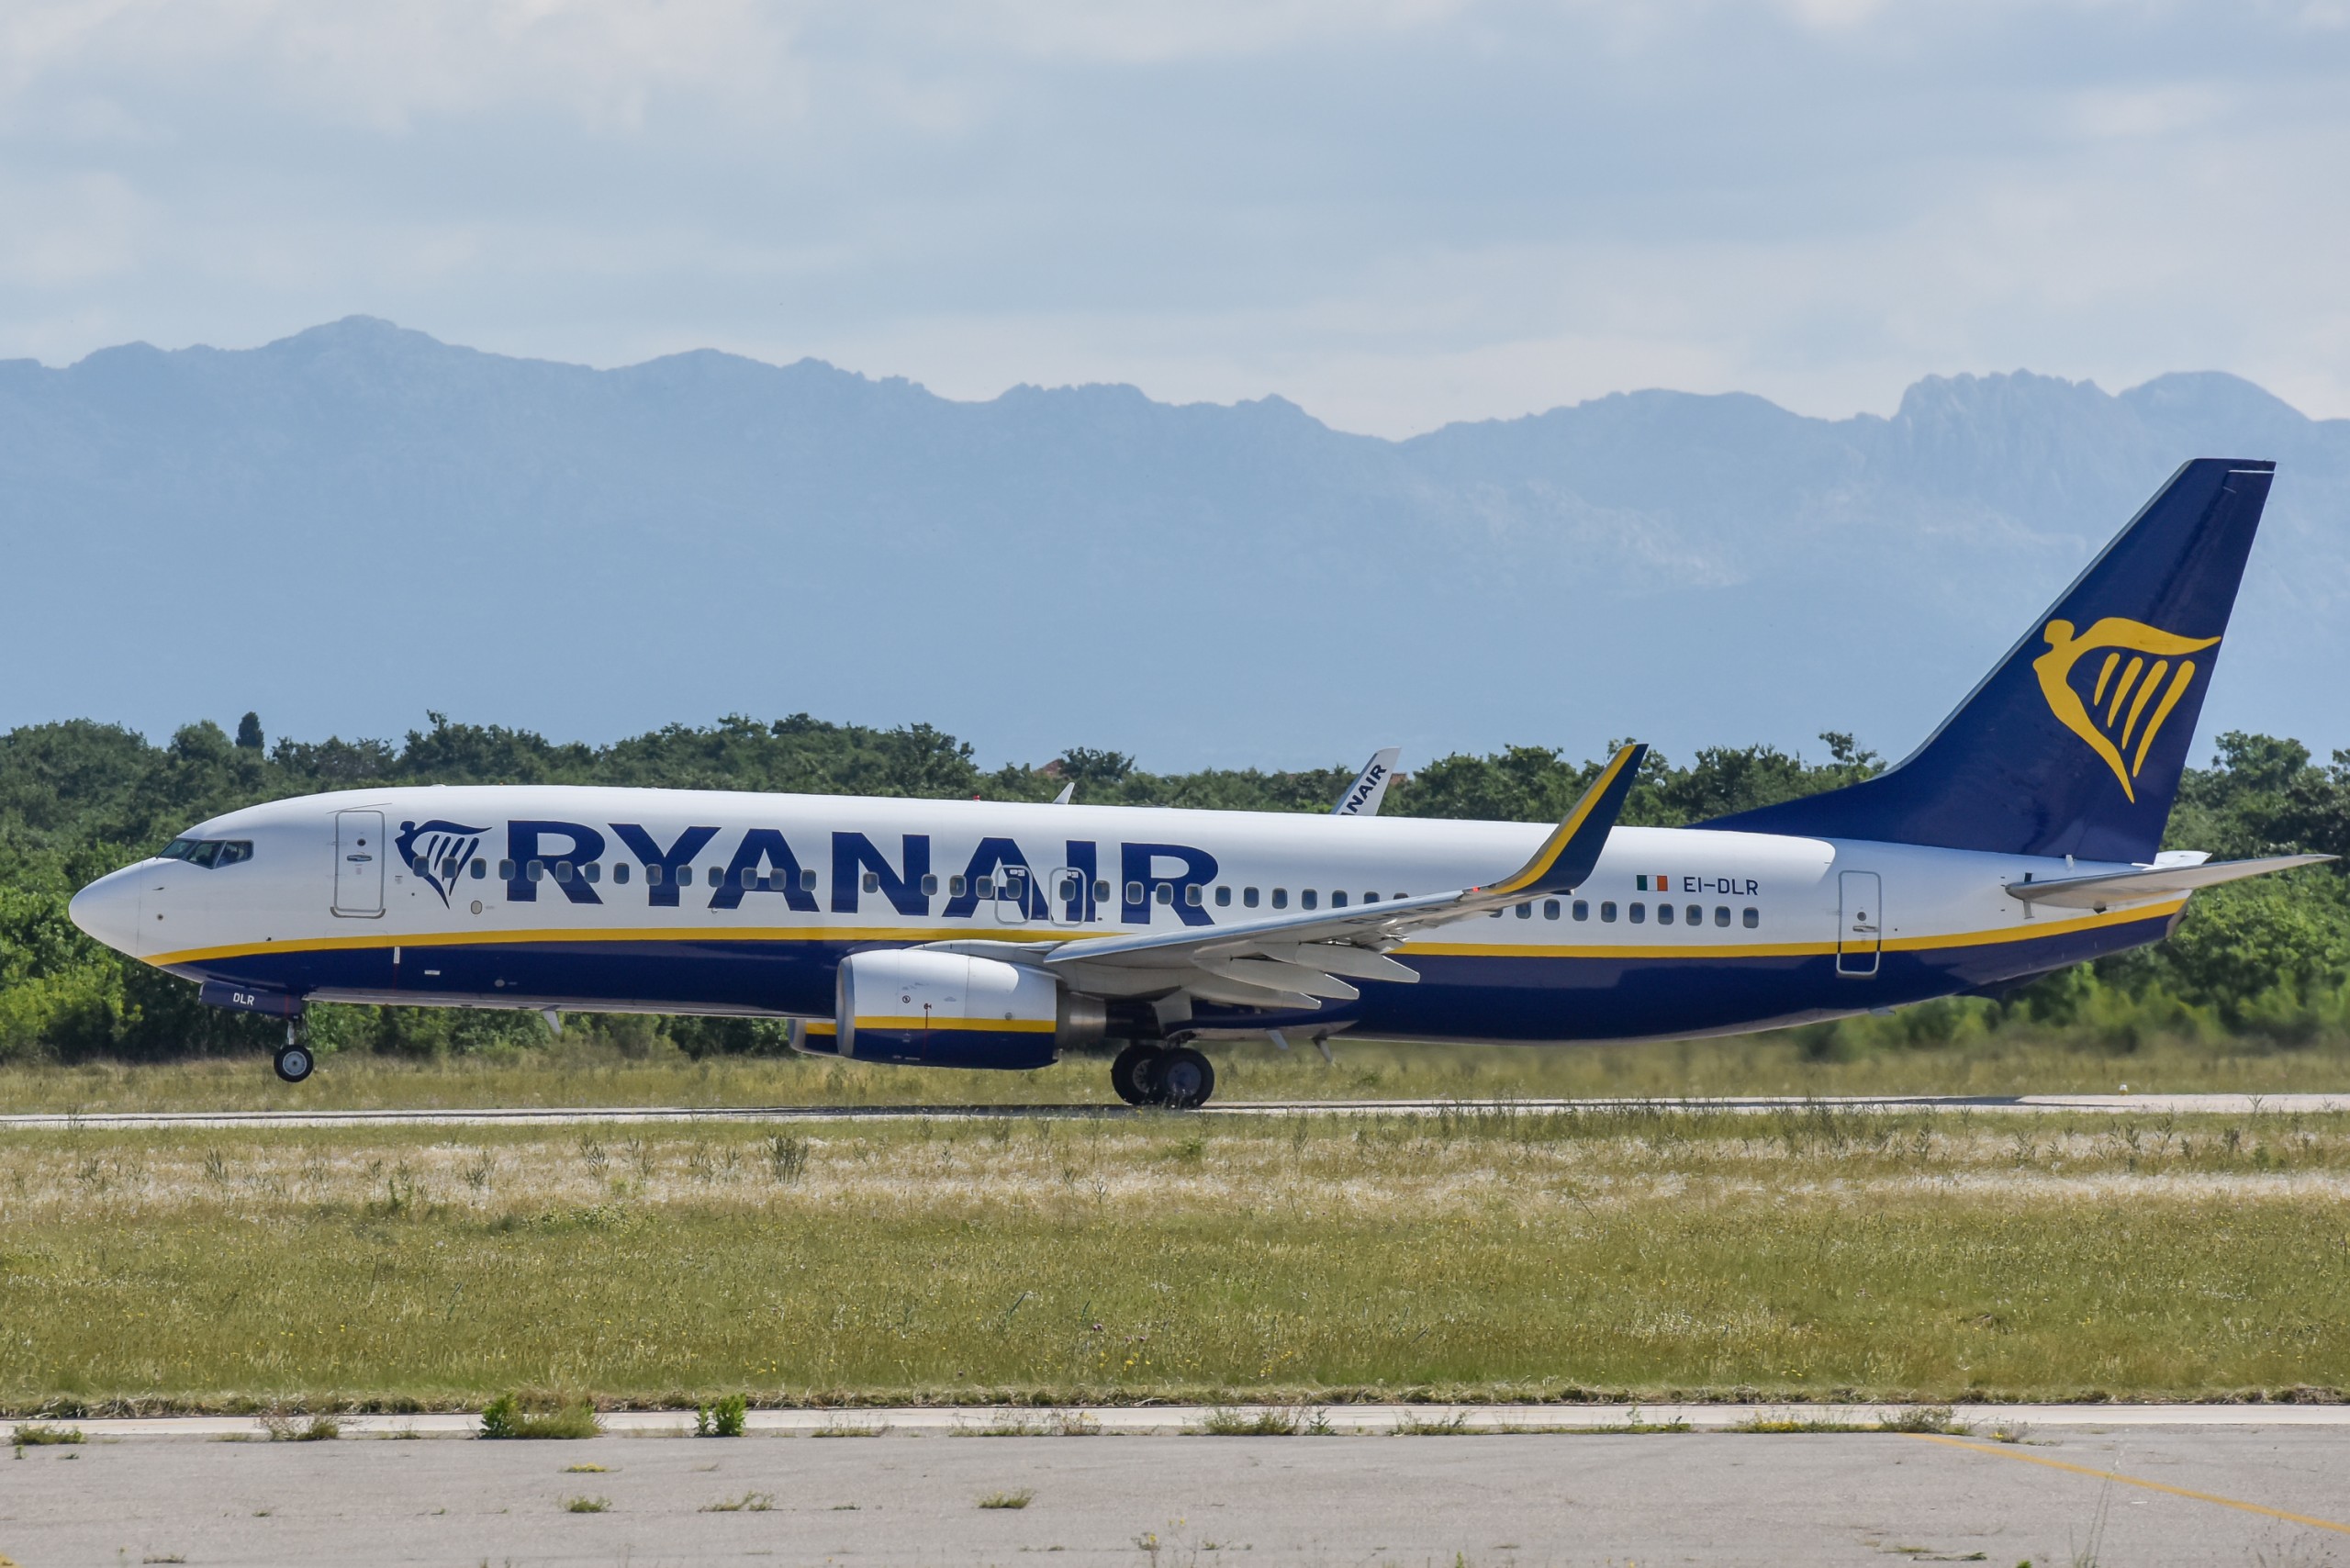 27.05.2015., Zadar - Zrakoplov Ryanair-a, ilustracija. "nPhoto: Dino Stanin/PIXSELL